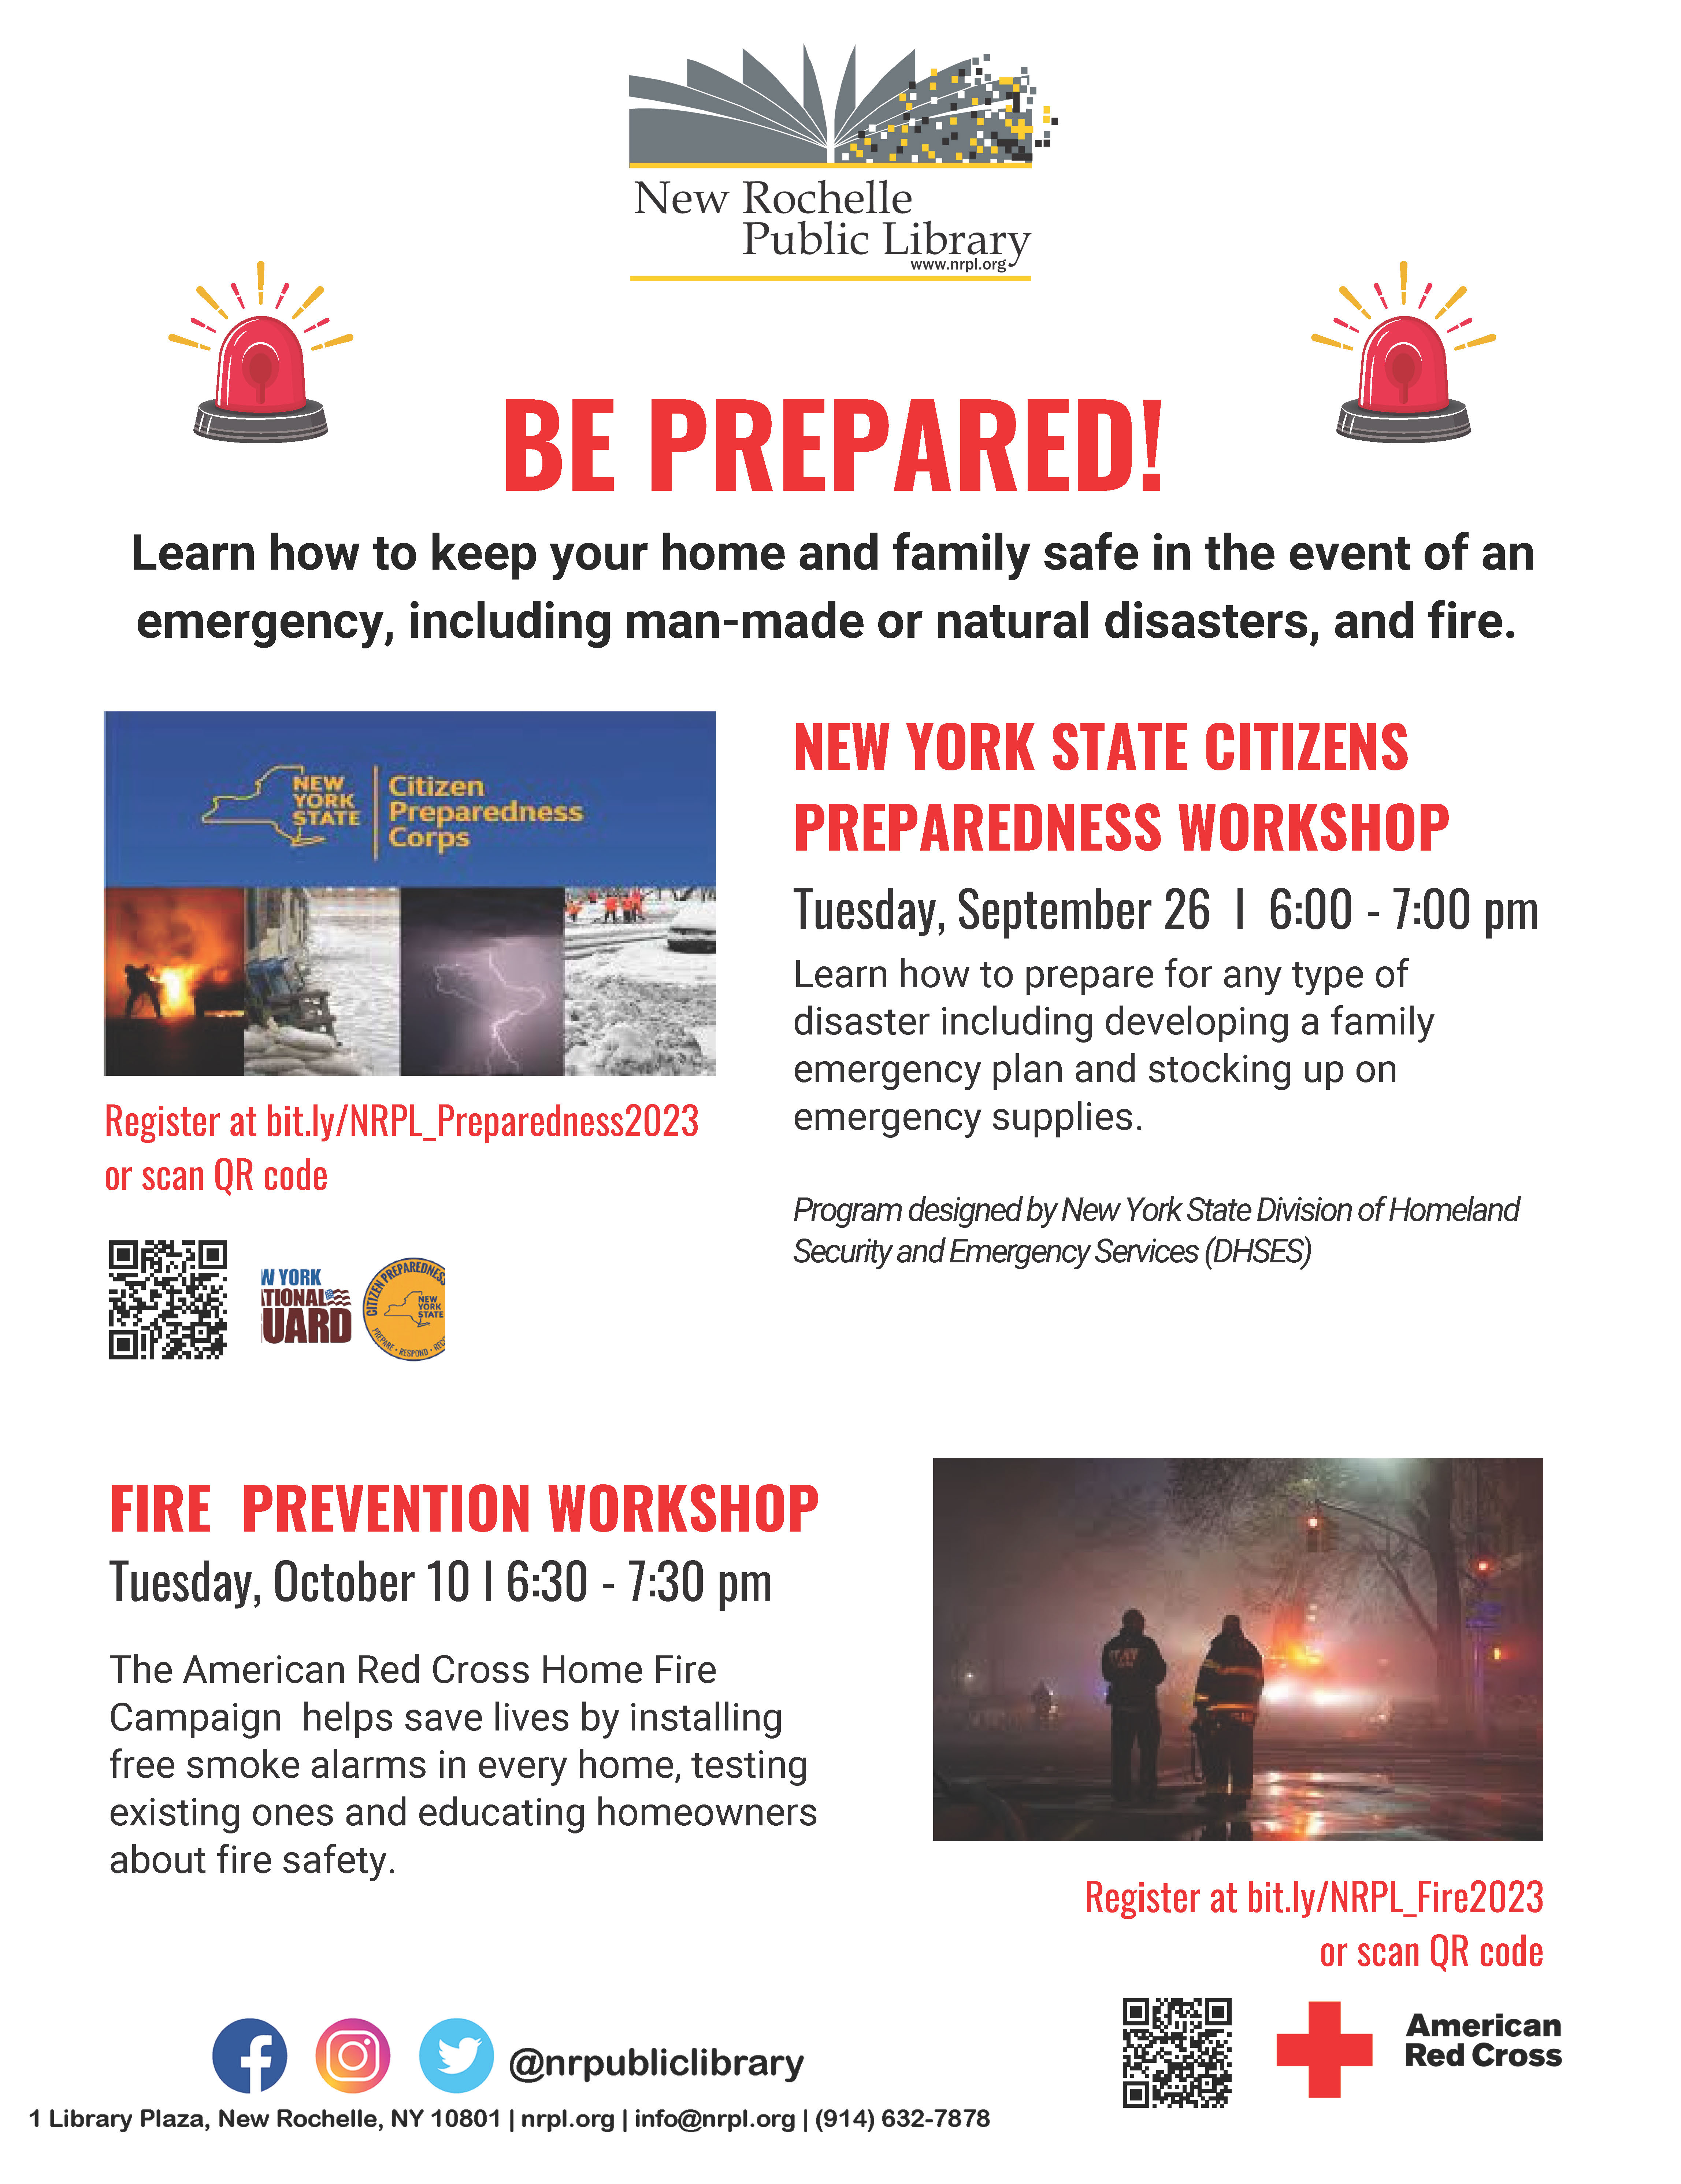 Fire Awareness Workshop on Tue., Oct. 10